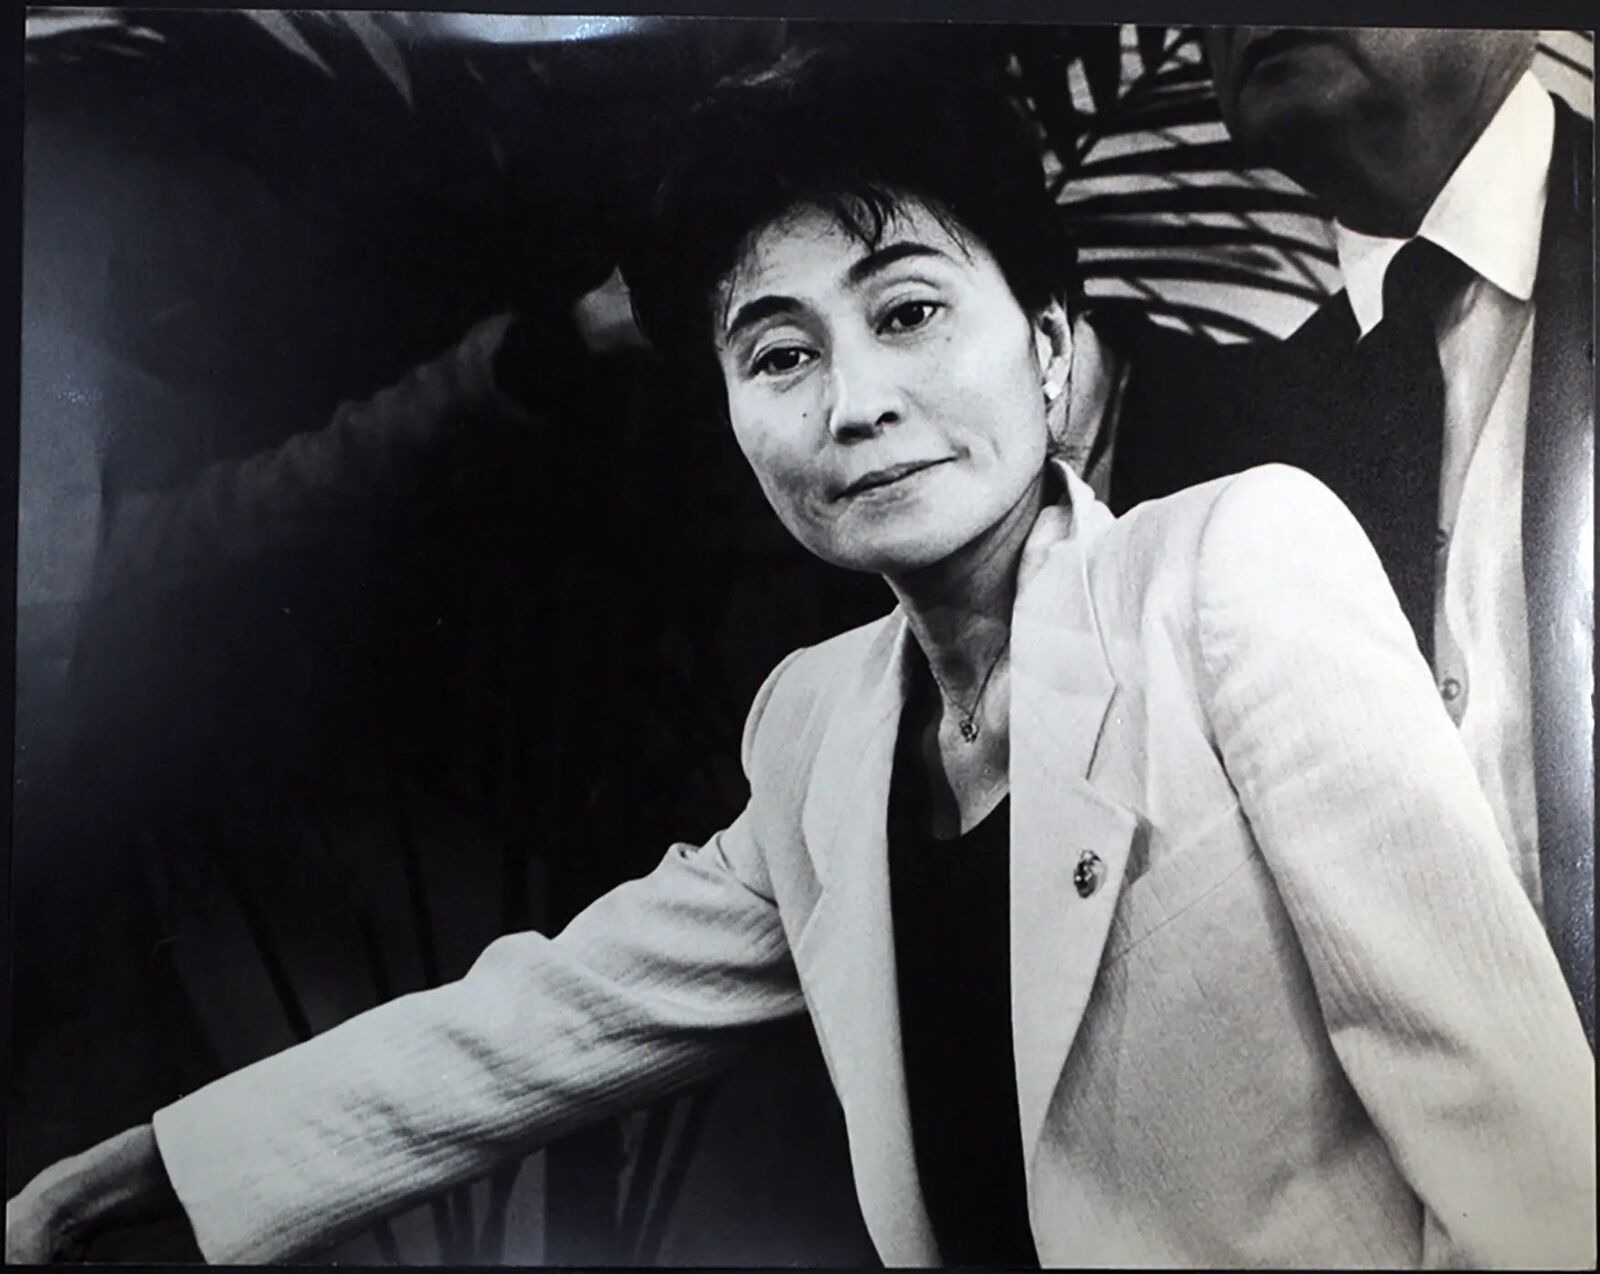 Vintage Press Photo Yoko Ono Years 80 FT 447 - print 10 5/8x14 5/8in